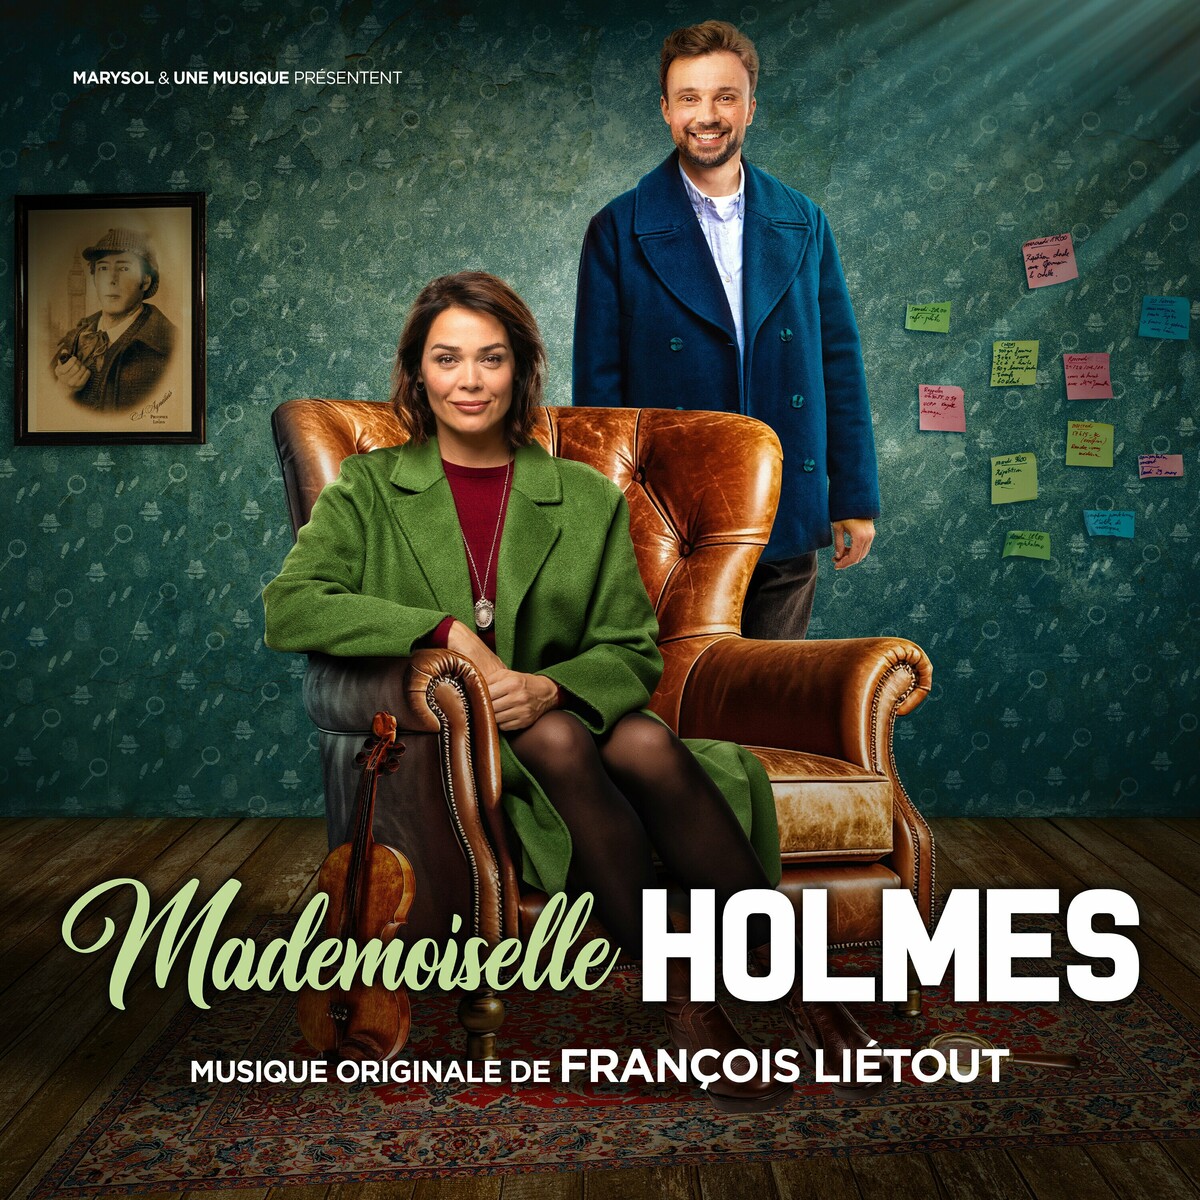 Mademoiselle Holmes Soundtrack (by Francois Lietout) -- Seeders: 3 -- Leechers: 0